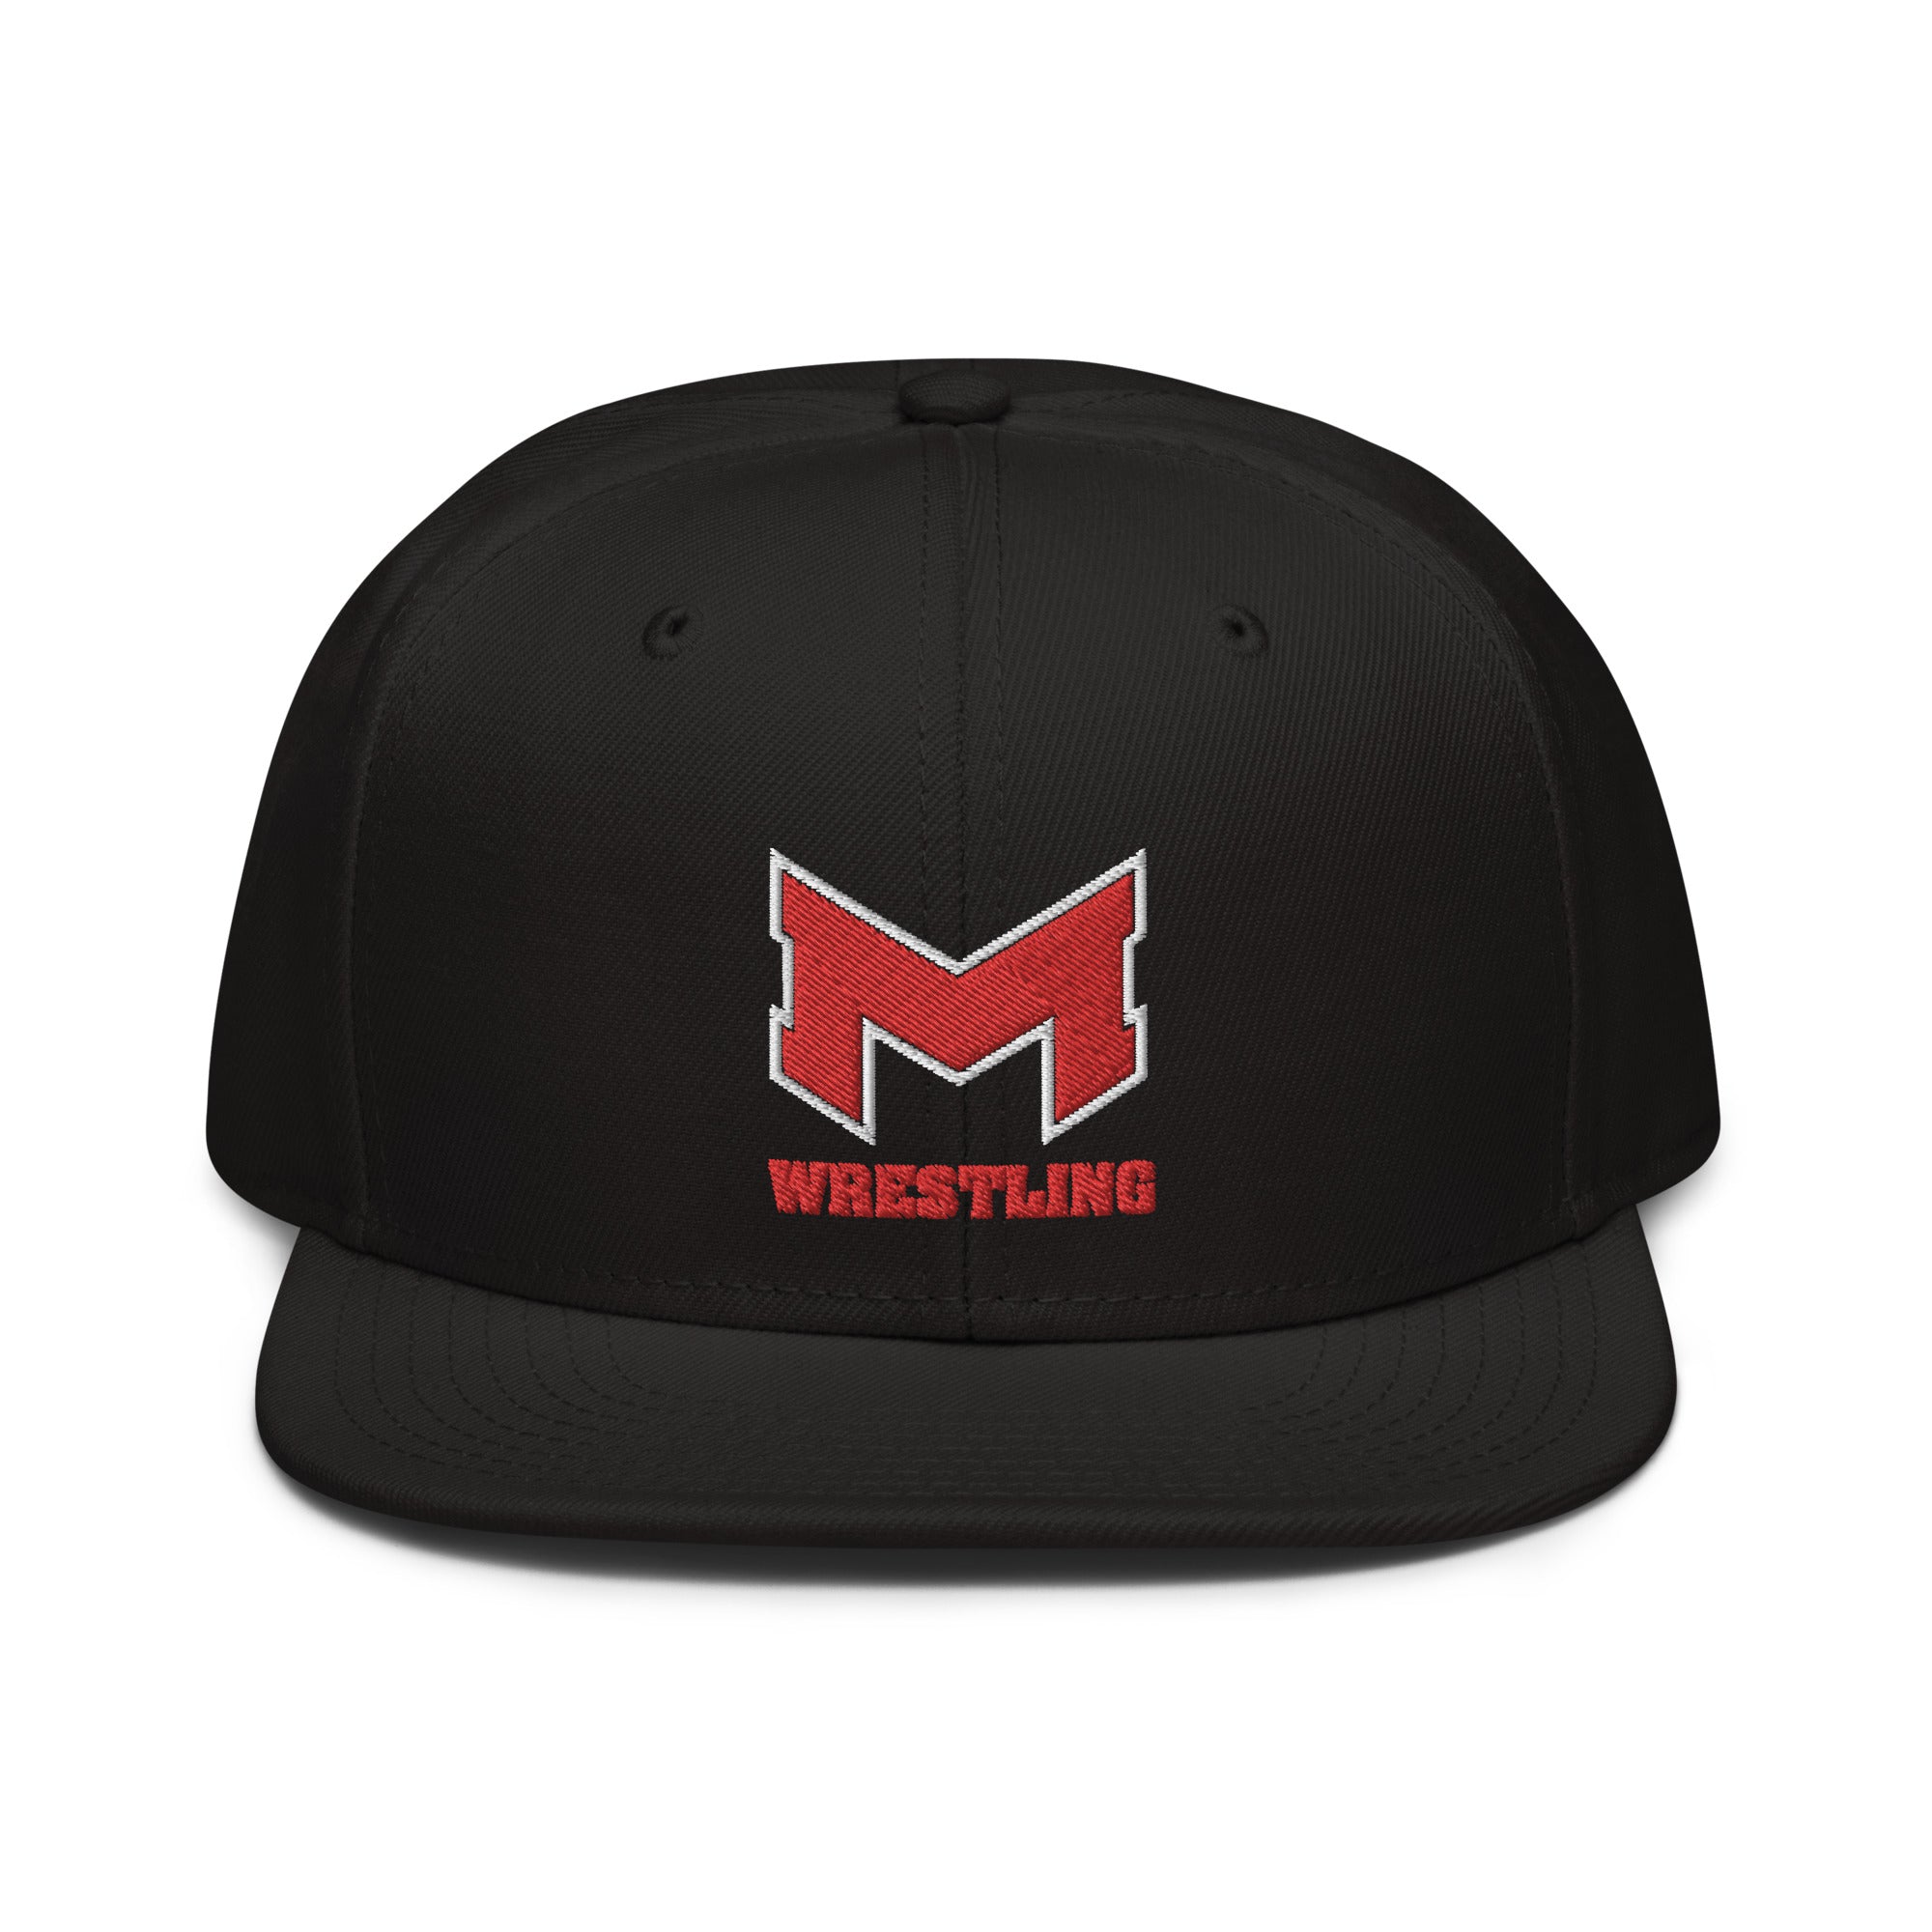 Maryville University Snapback Hat